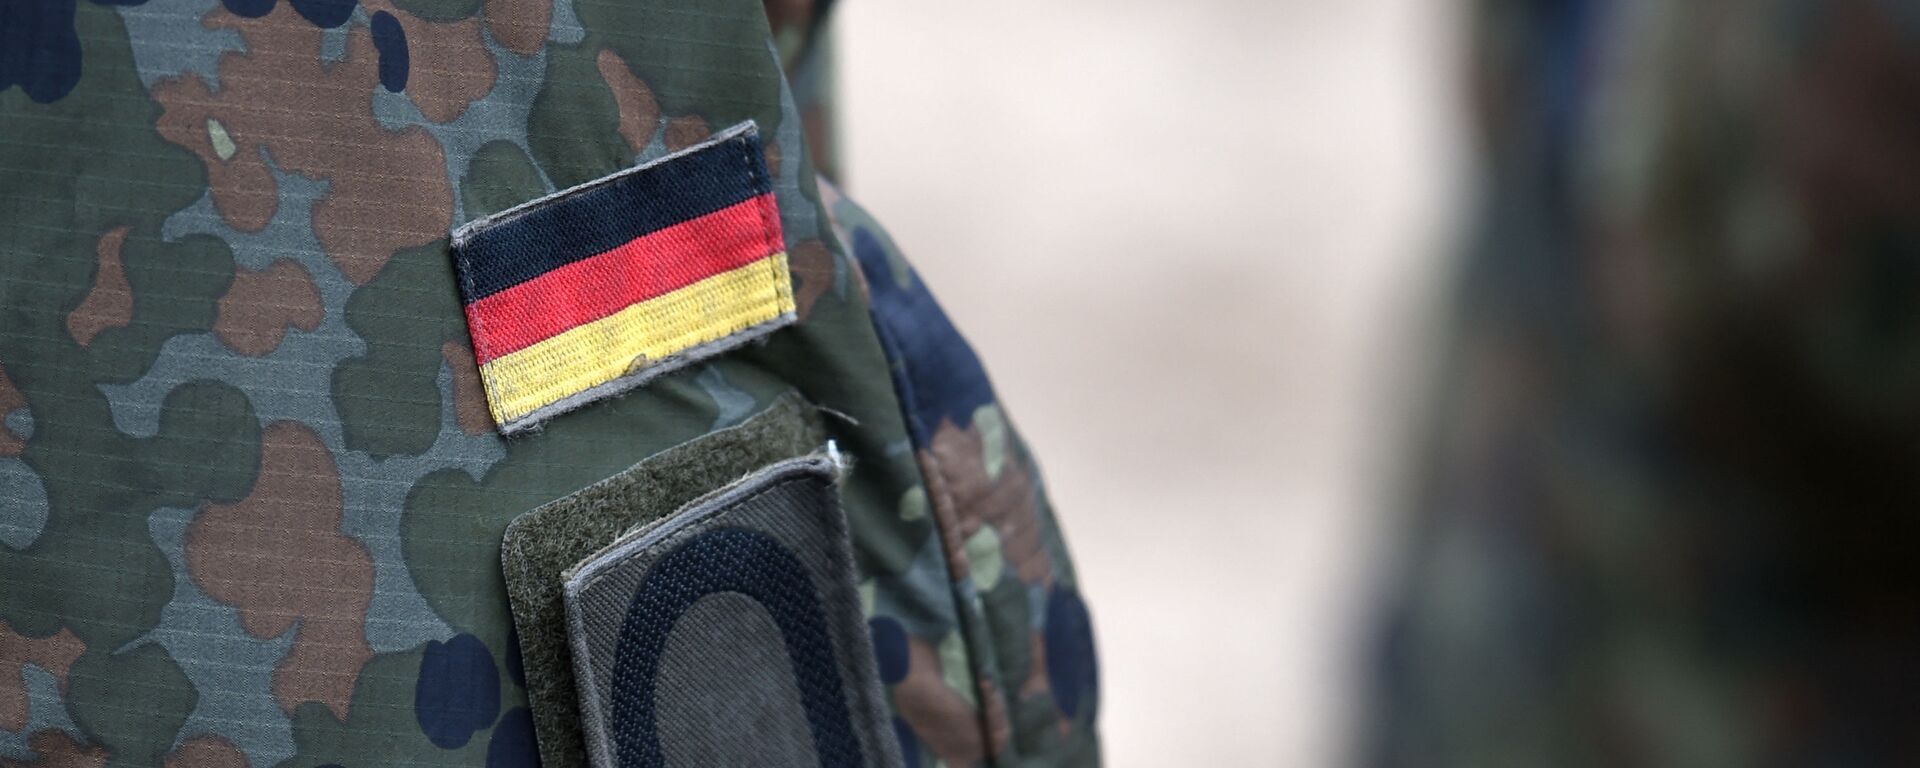 Немецкий флаг изображен на форме солдата - Sputnik Latvija, 1920, 21.06.2021